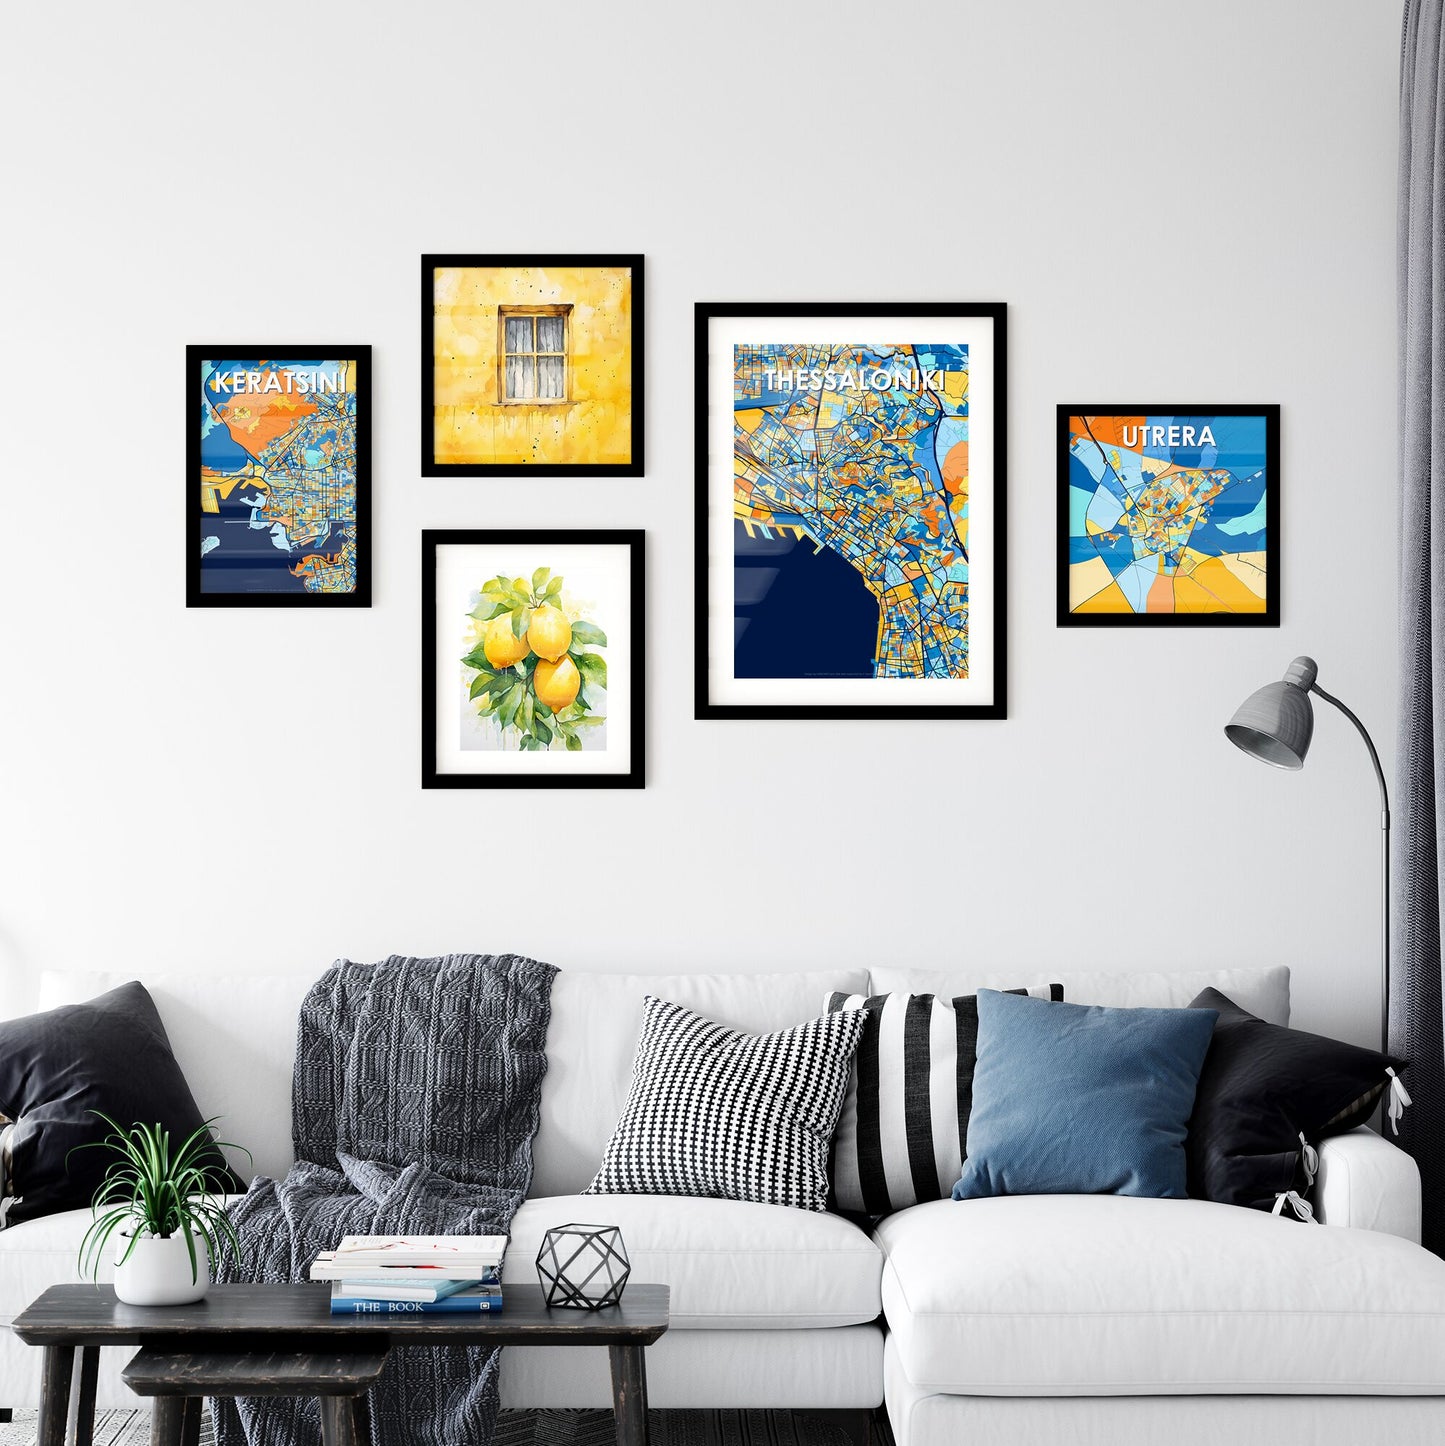 THESSALONIKI GREECE Vibrant Colorful Art Map Poster Blue Orange